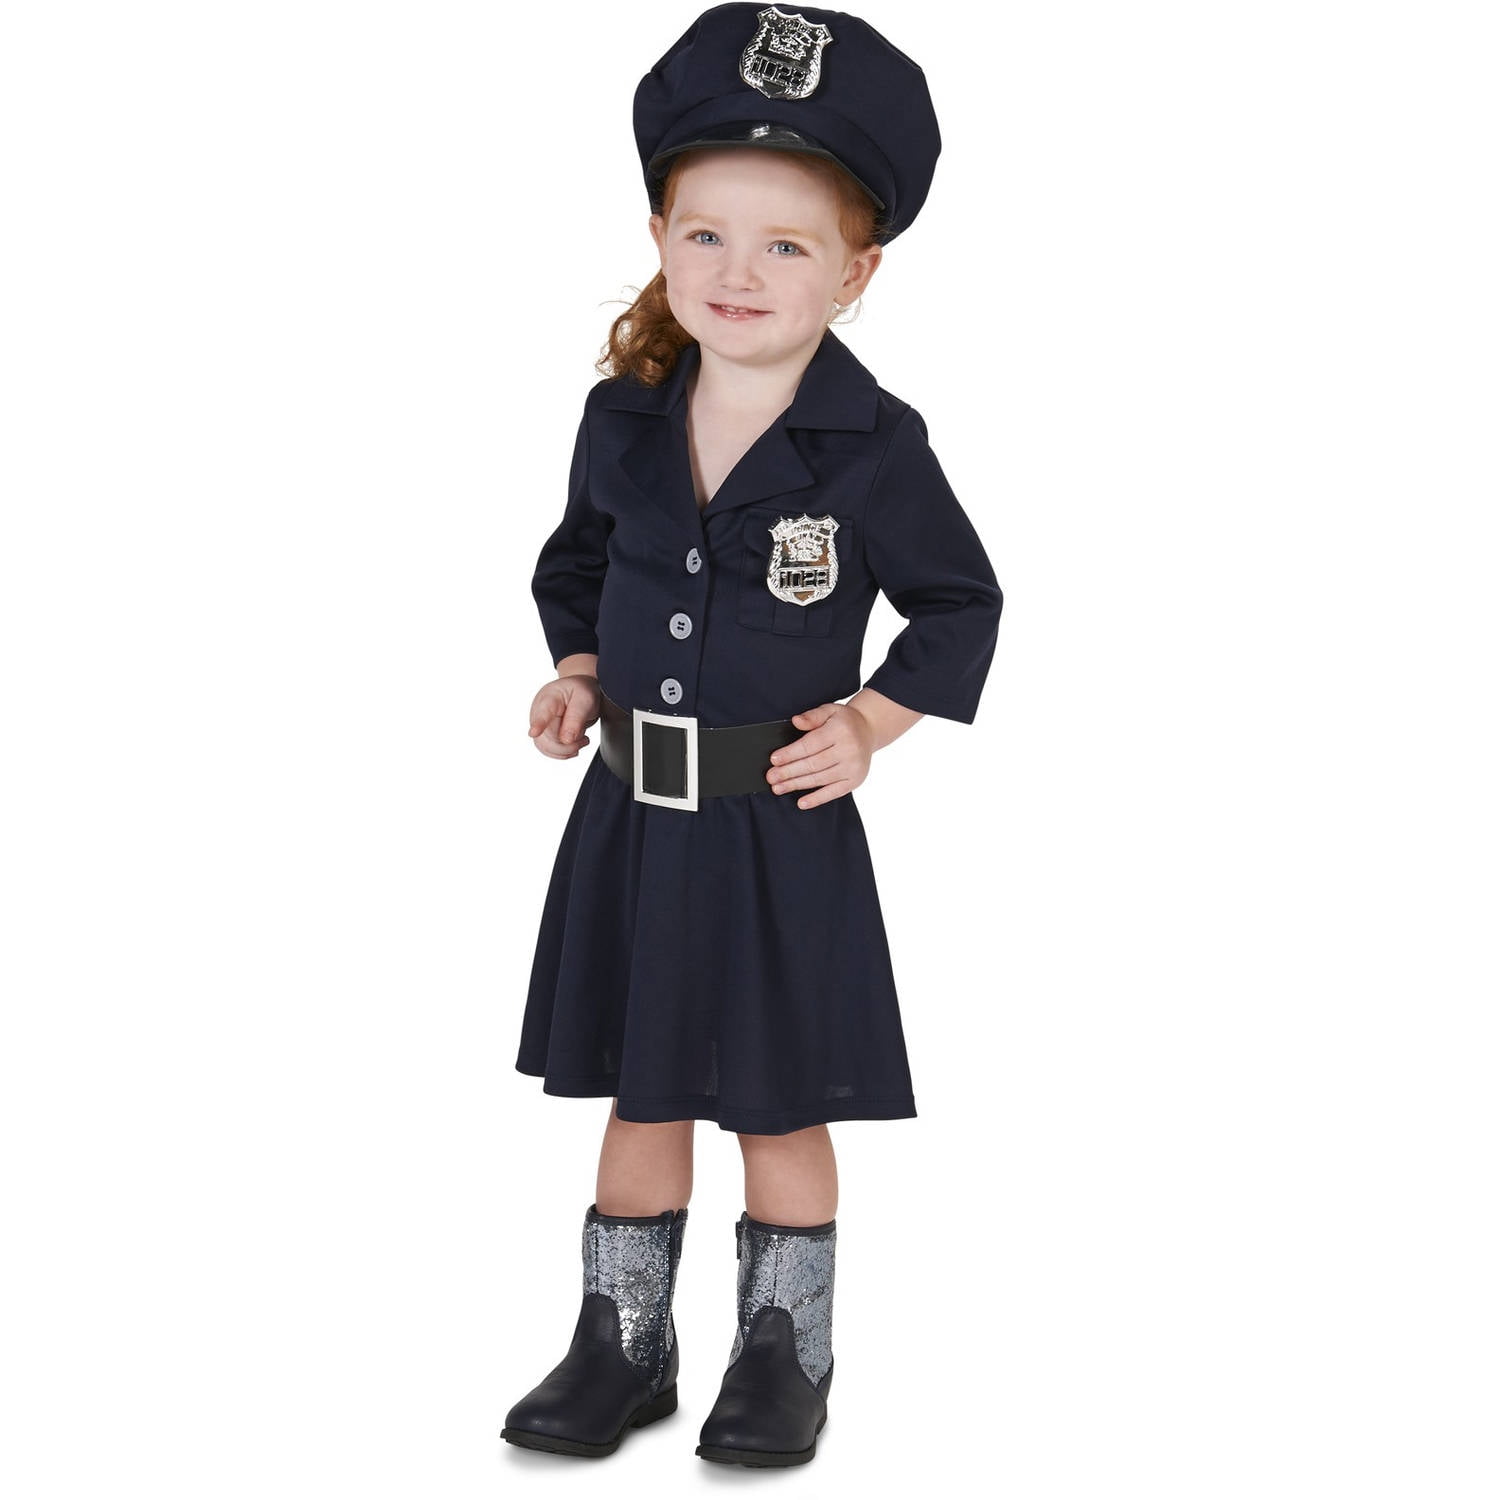 Police Officer Girl Toddler Halloween Costume, Size 3T-4T - Walmart.com